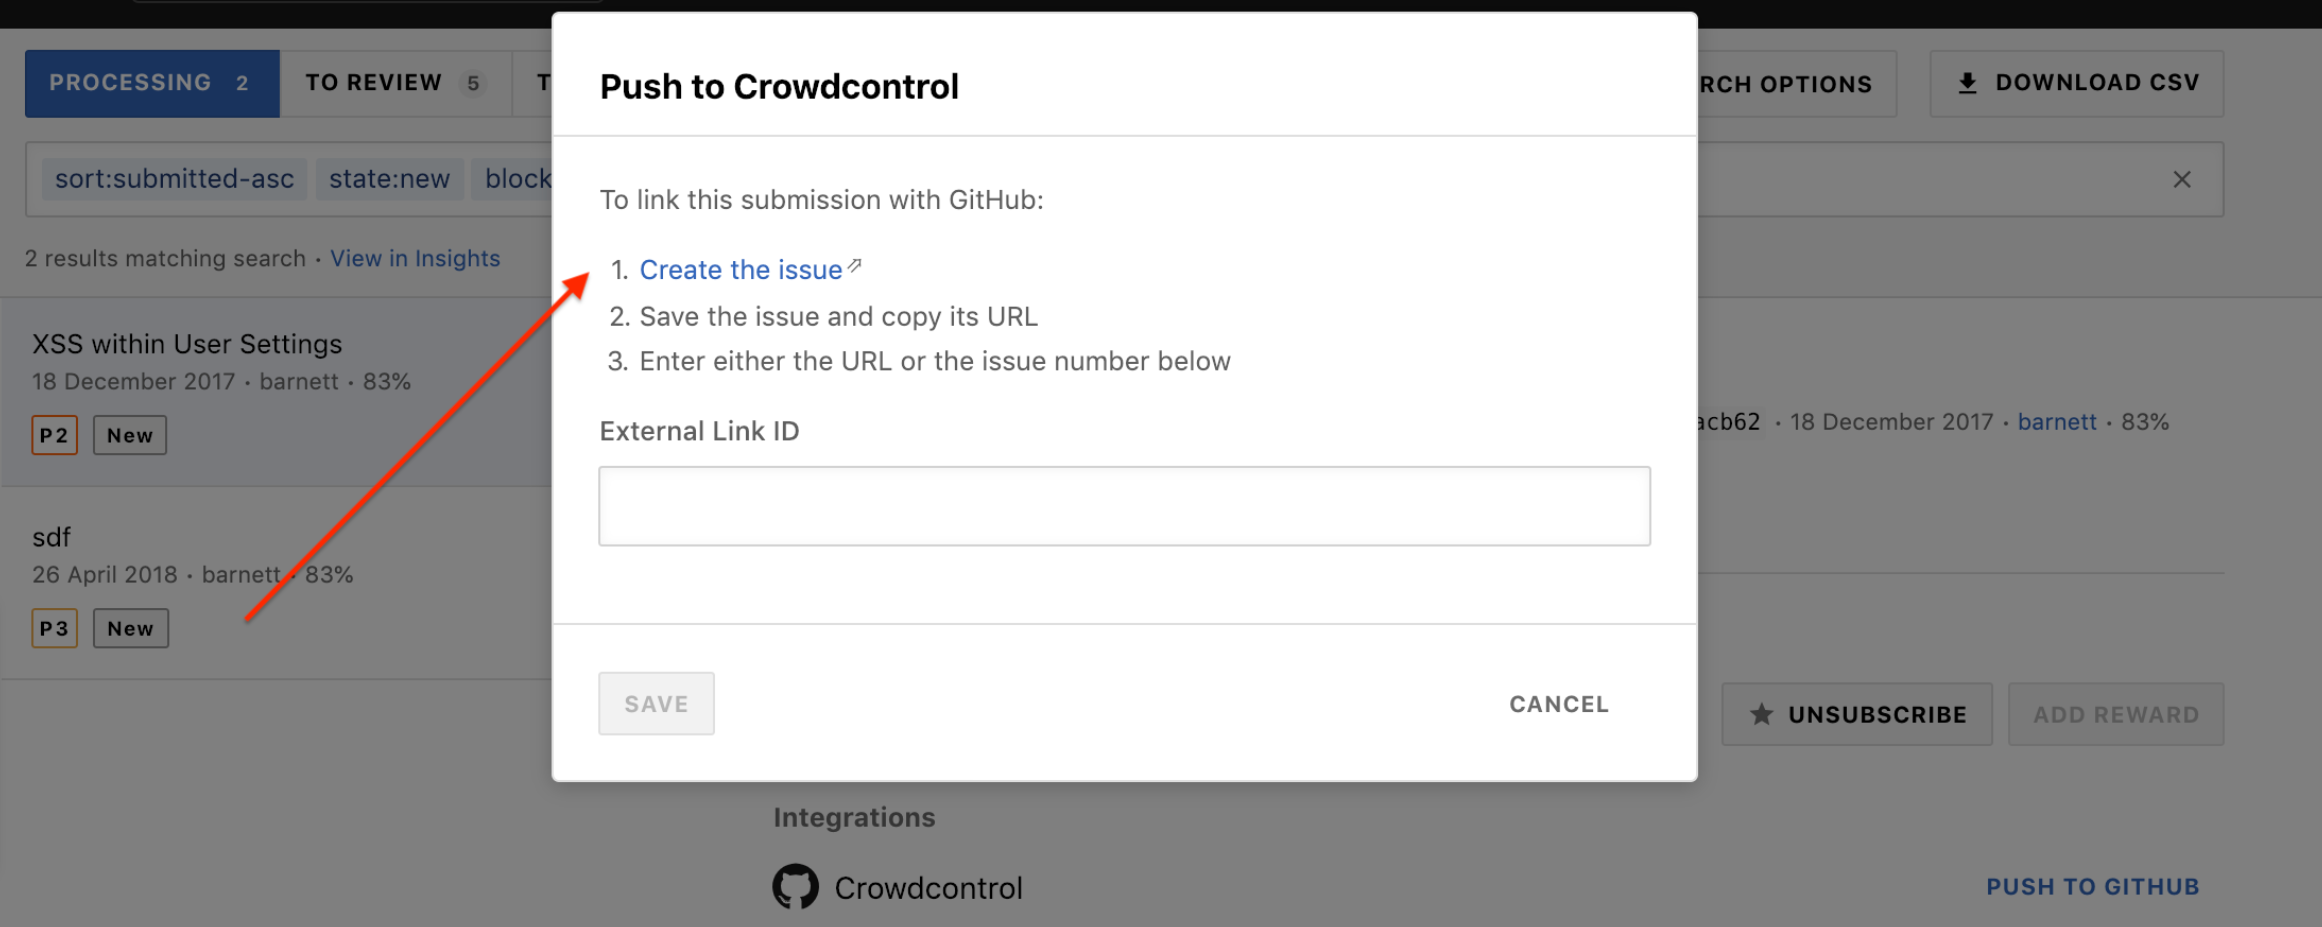 push to Crowdcontrol